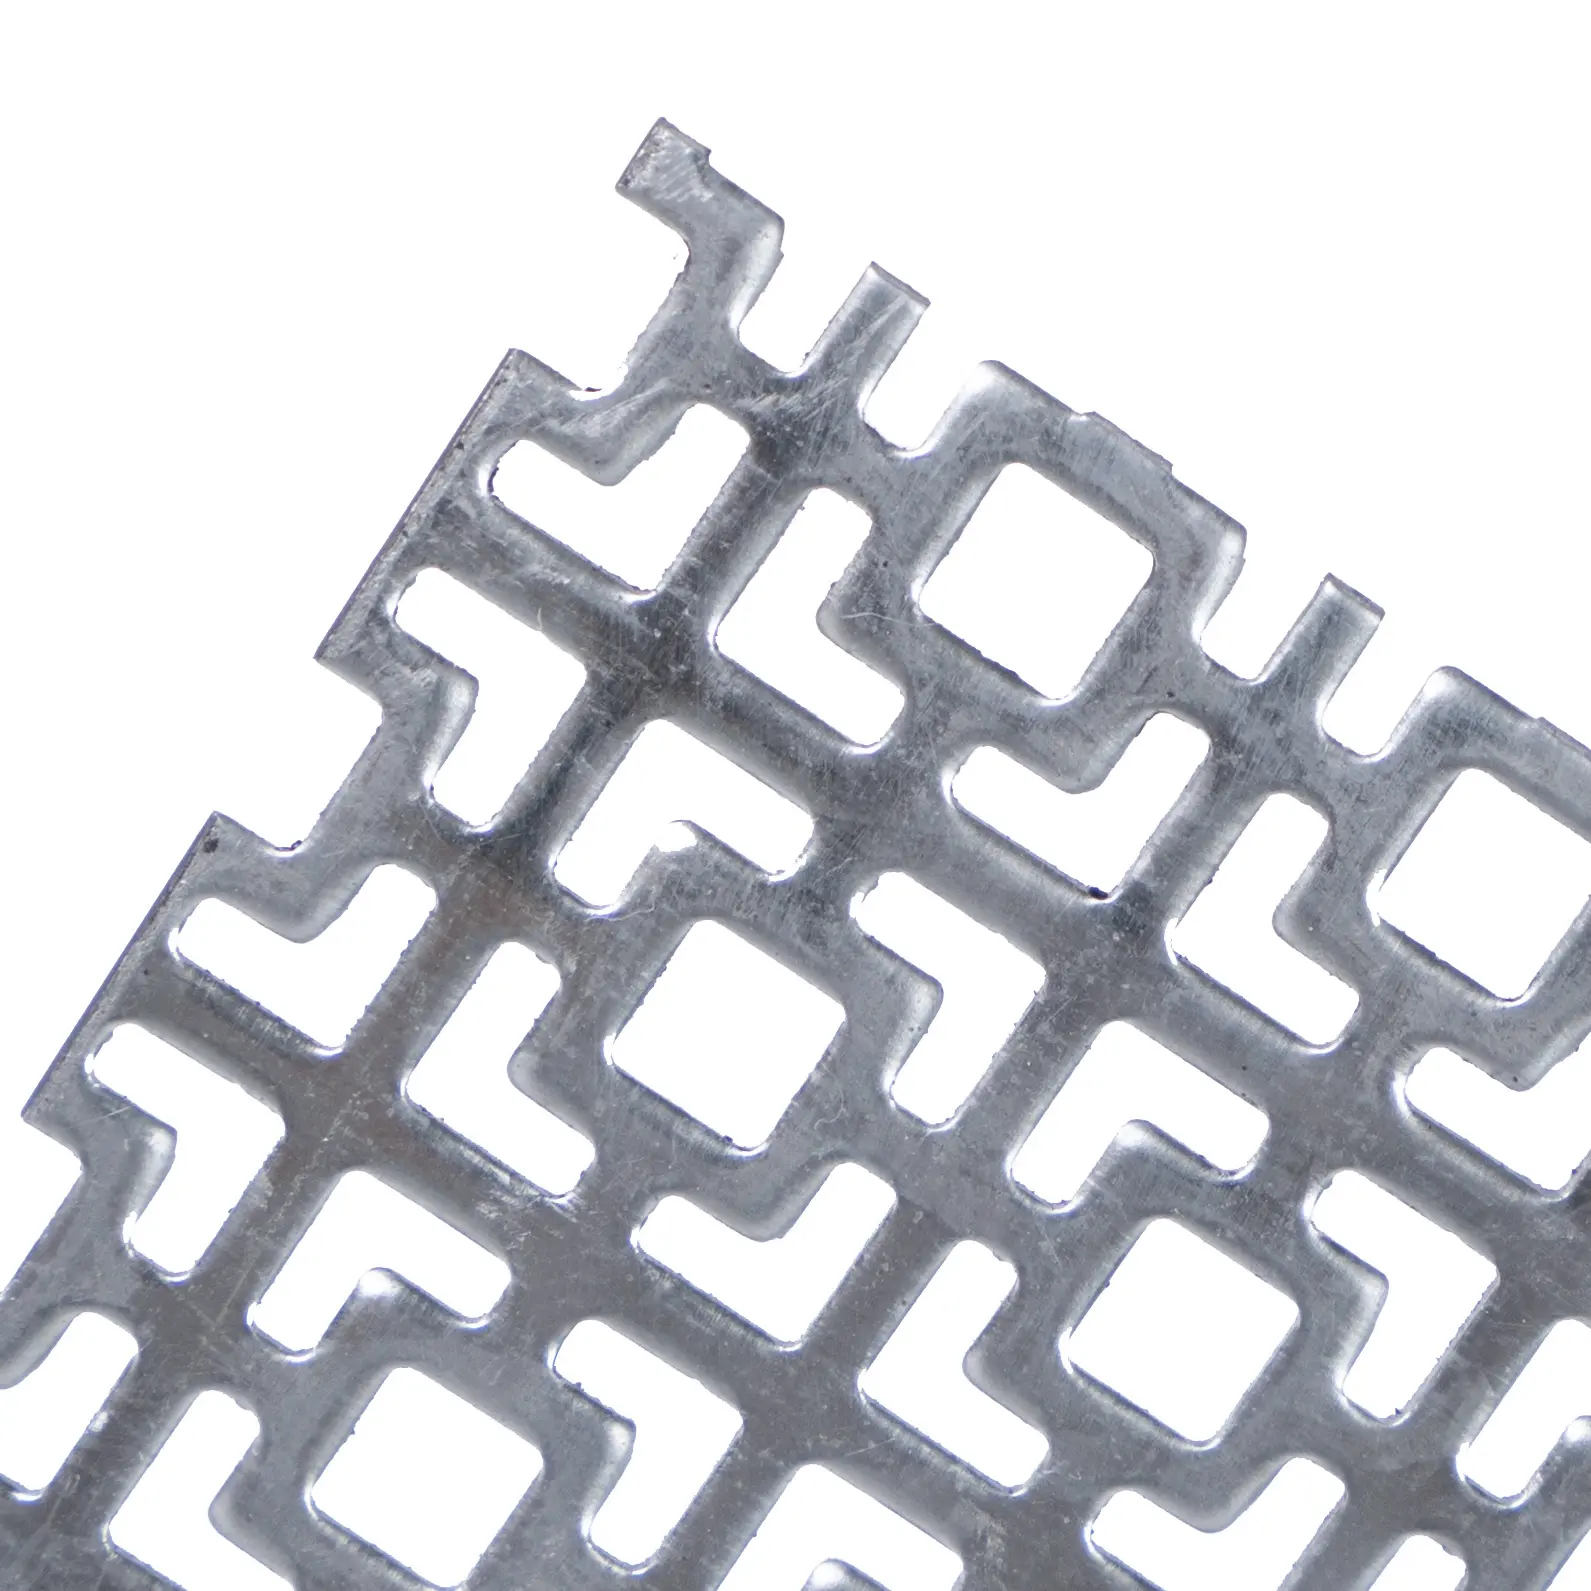 Hoja perforada de aluminio decorativa perforada con forma de agujero especial.